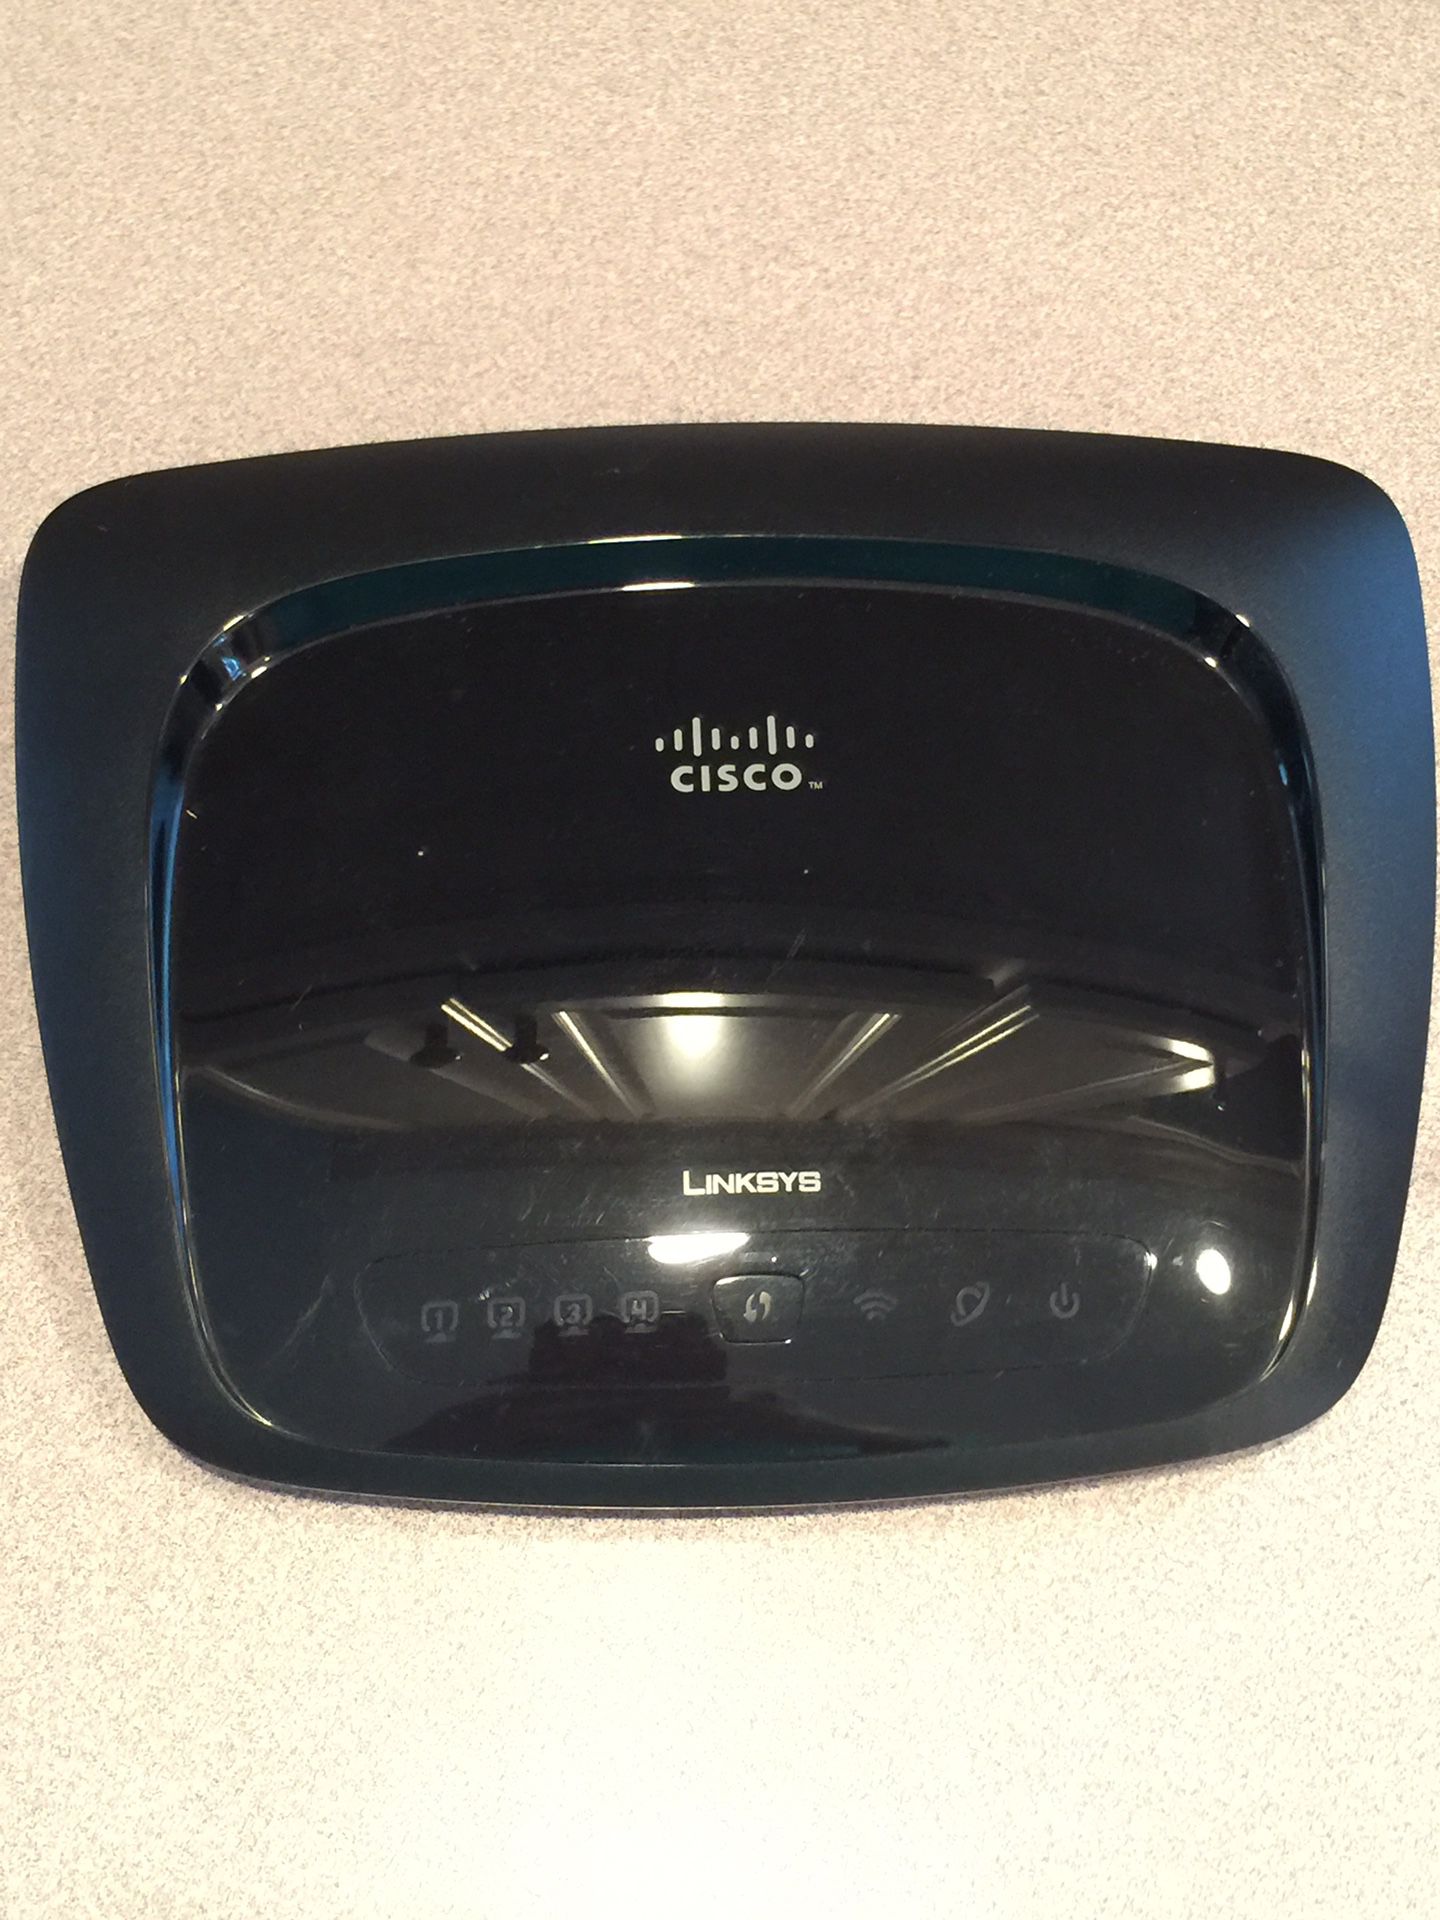 Cisco LINKSYS Wireless Router WRT120N